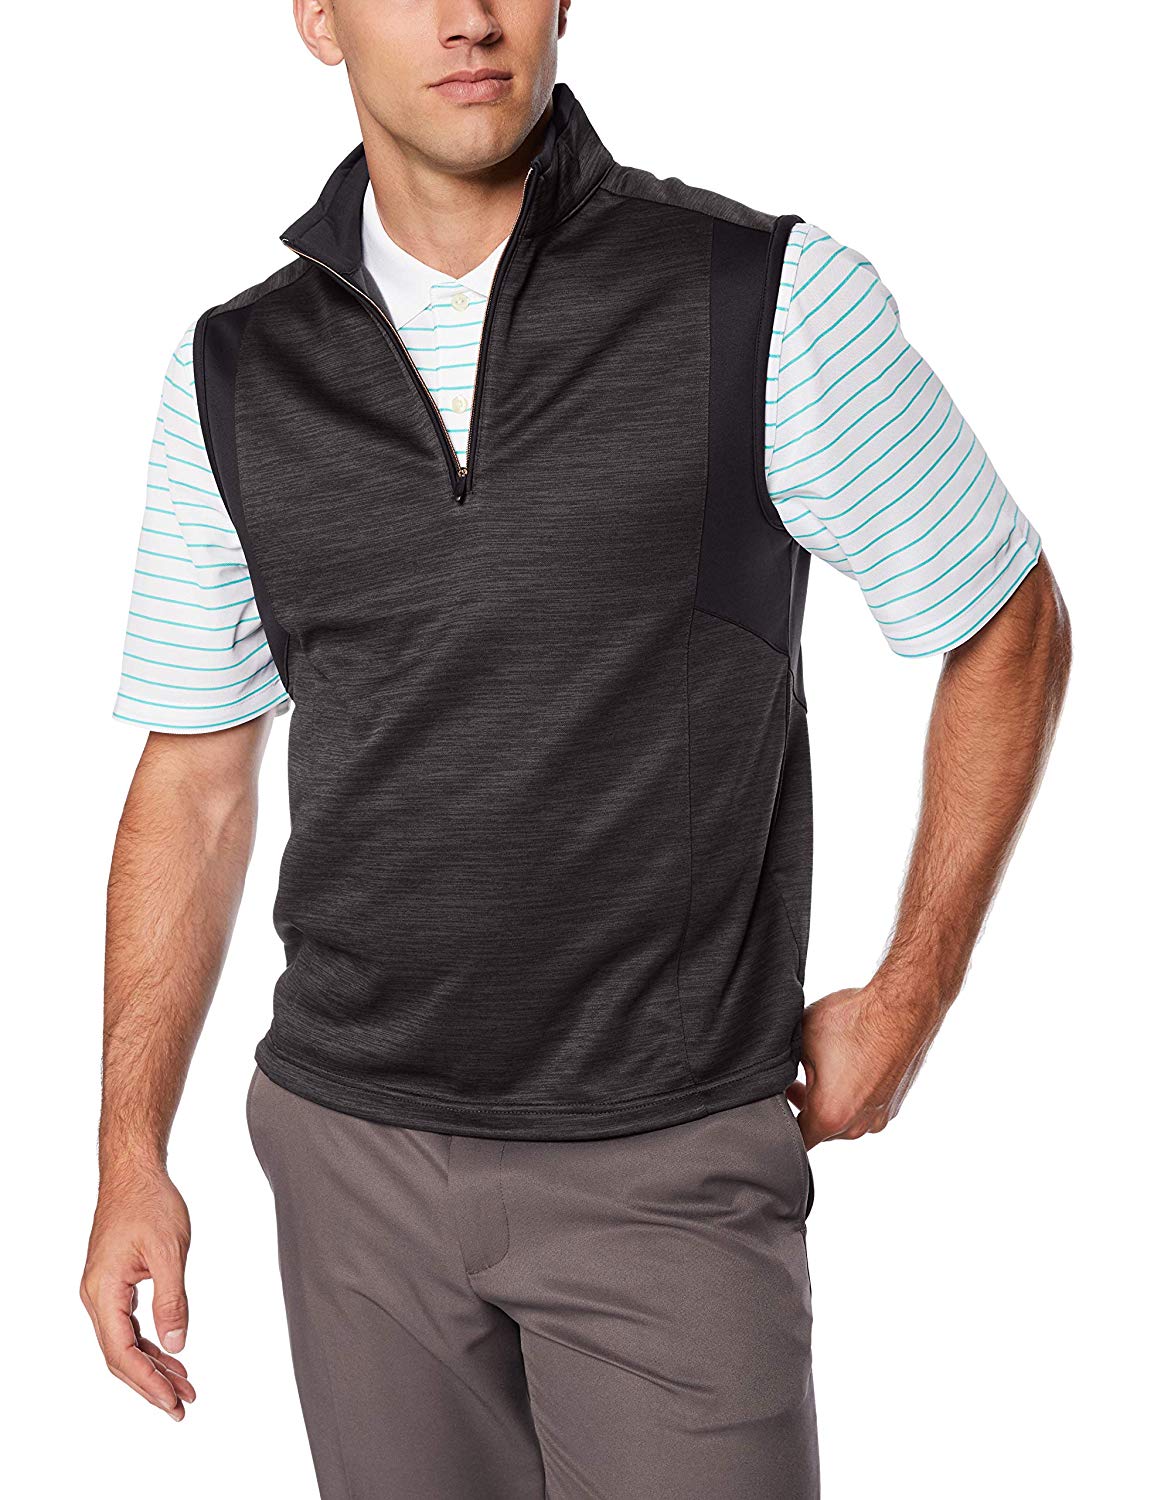 Buy Greg Norman Mens Golf Vests for Best Prices Online!